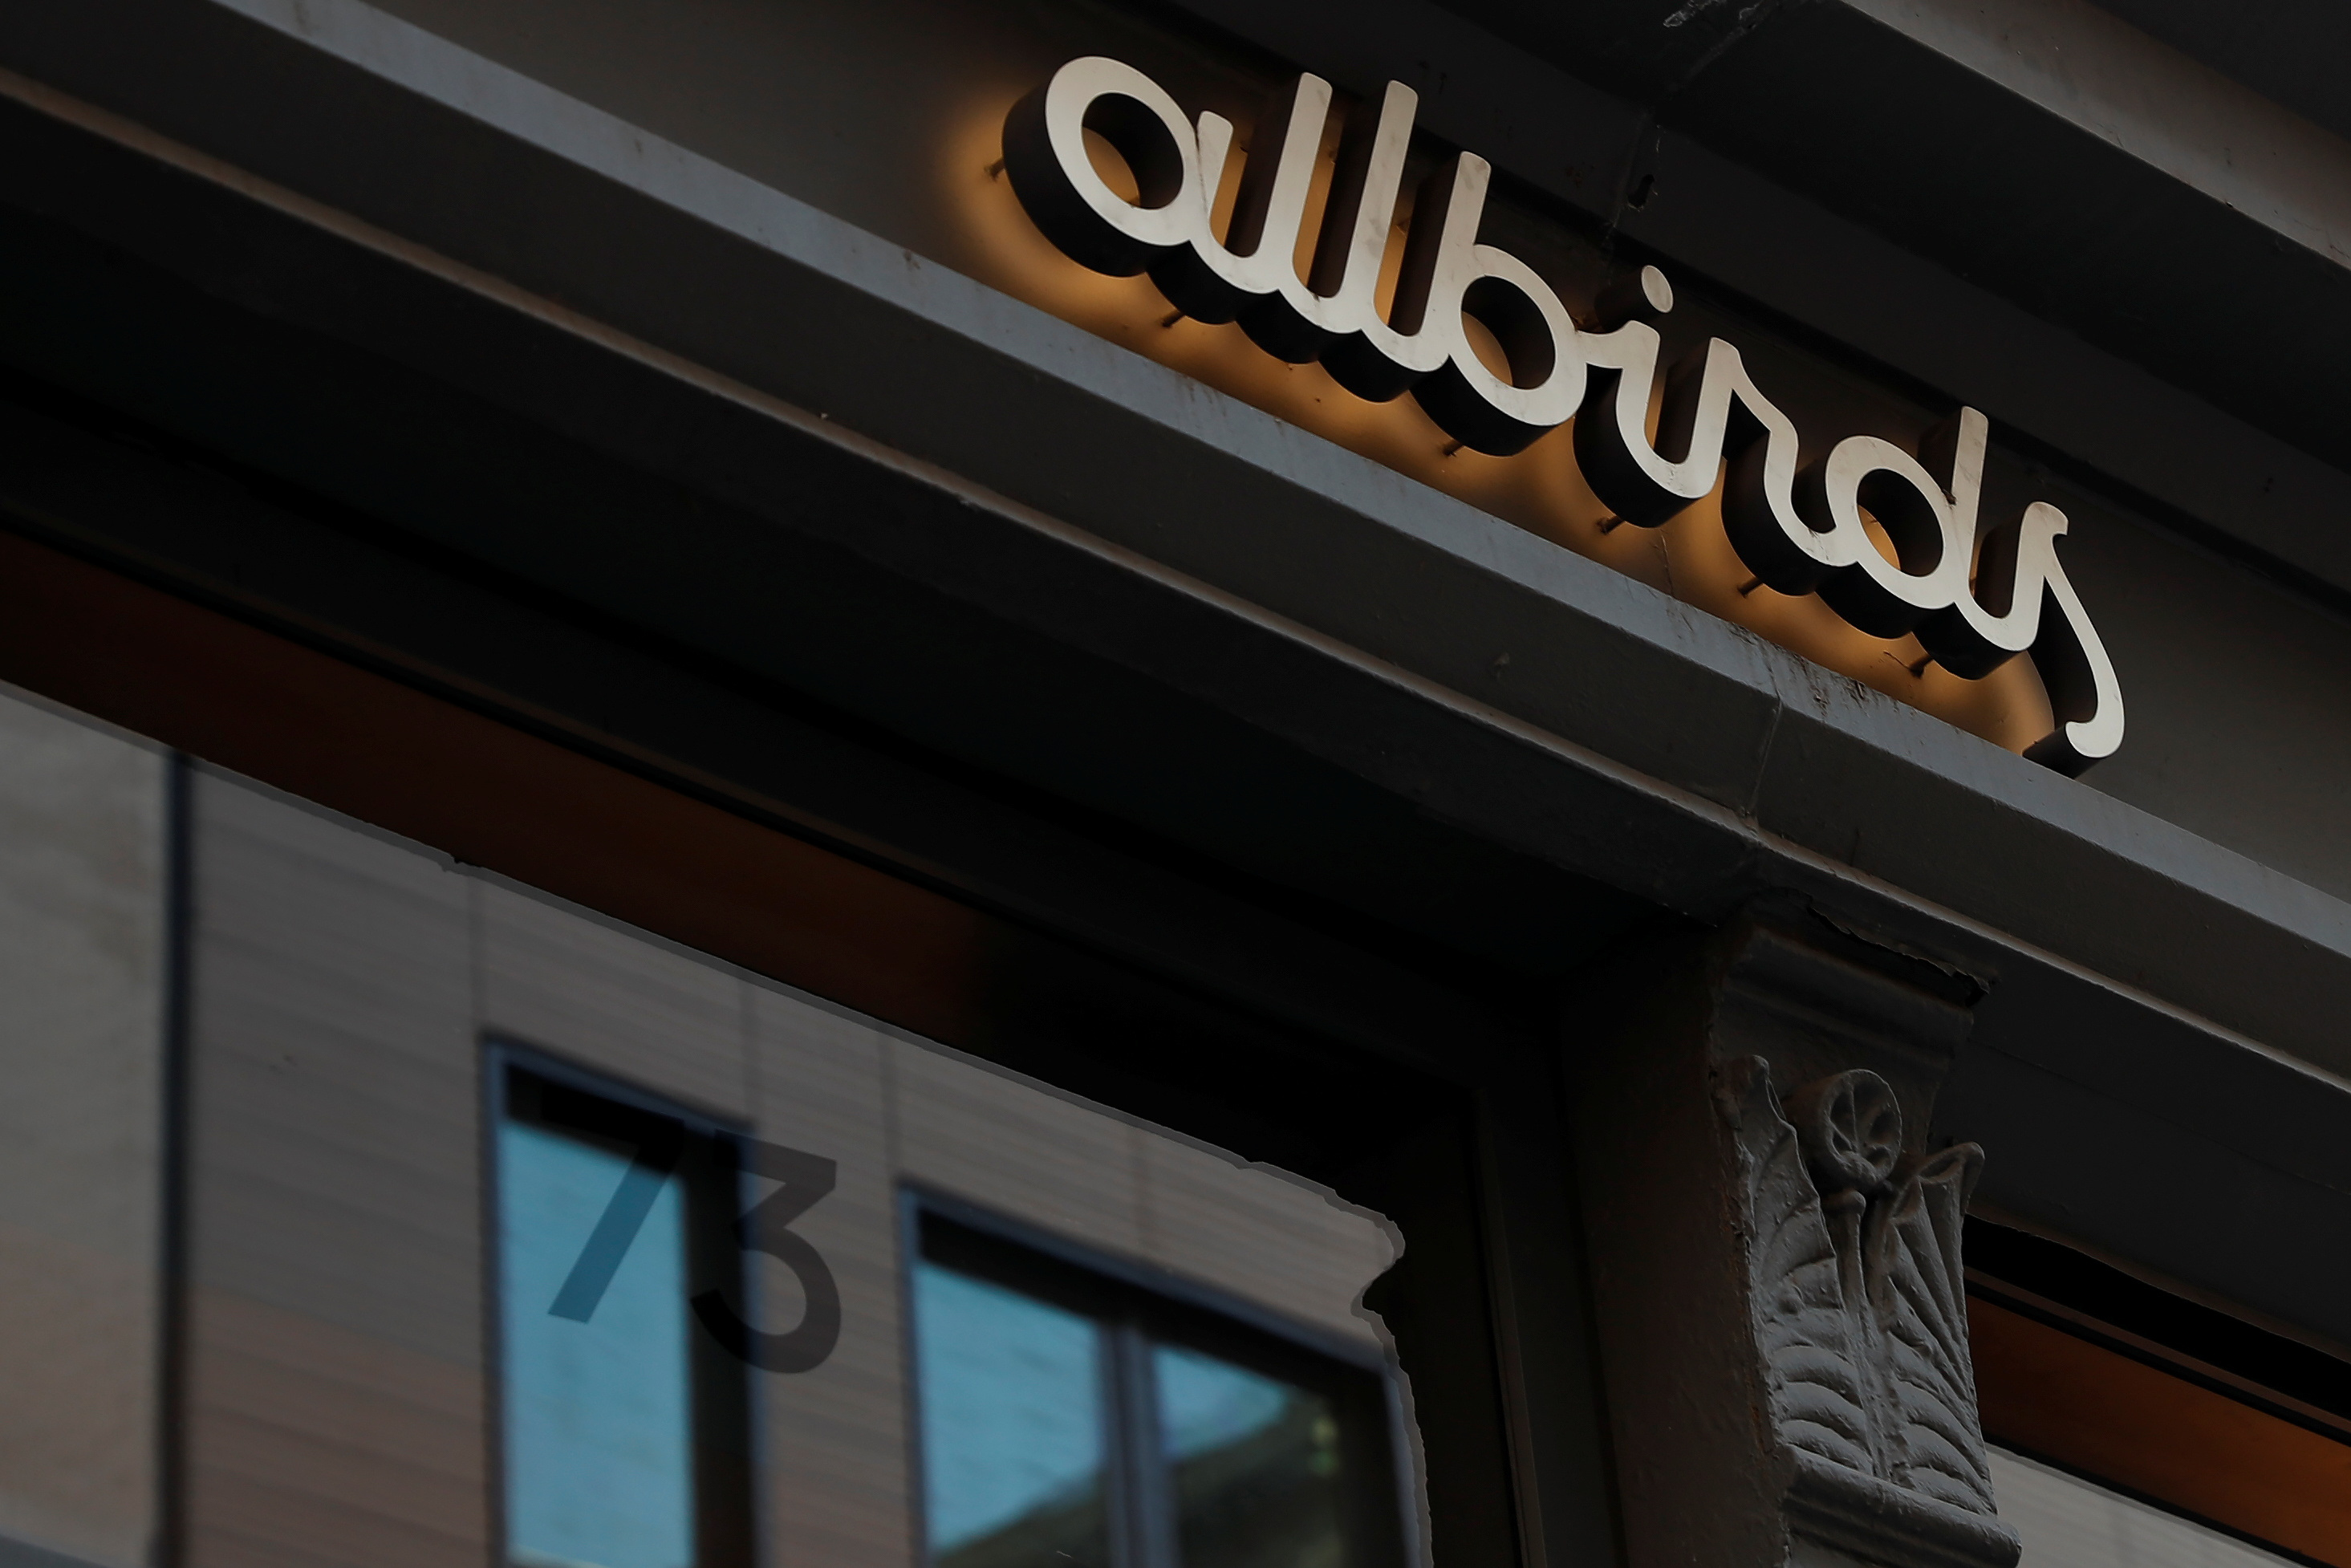 The Allbirds flagship store sign is seen in Manhattan, New York City, U.S., September 7, 2021.